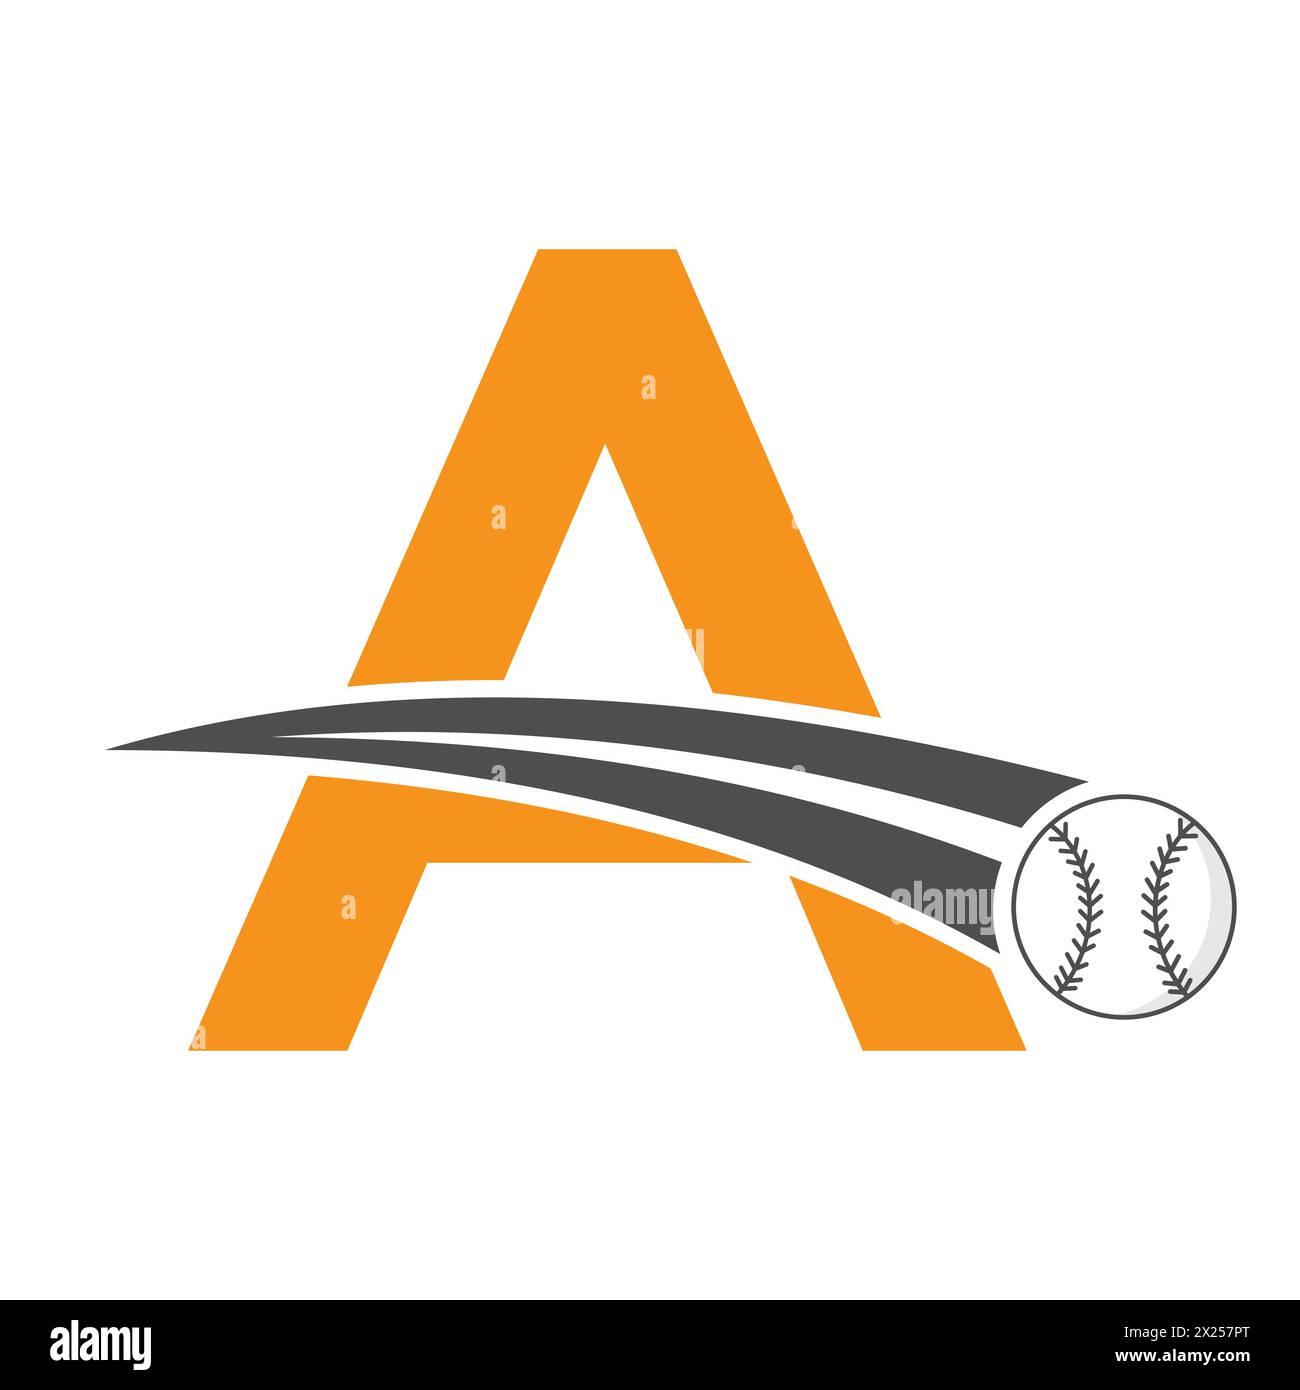 Baseball Logo On Letter A Concept With Moving Baseball Symbol. Baseball Sign Stock Vector